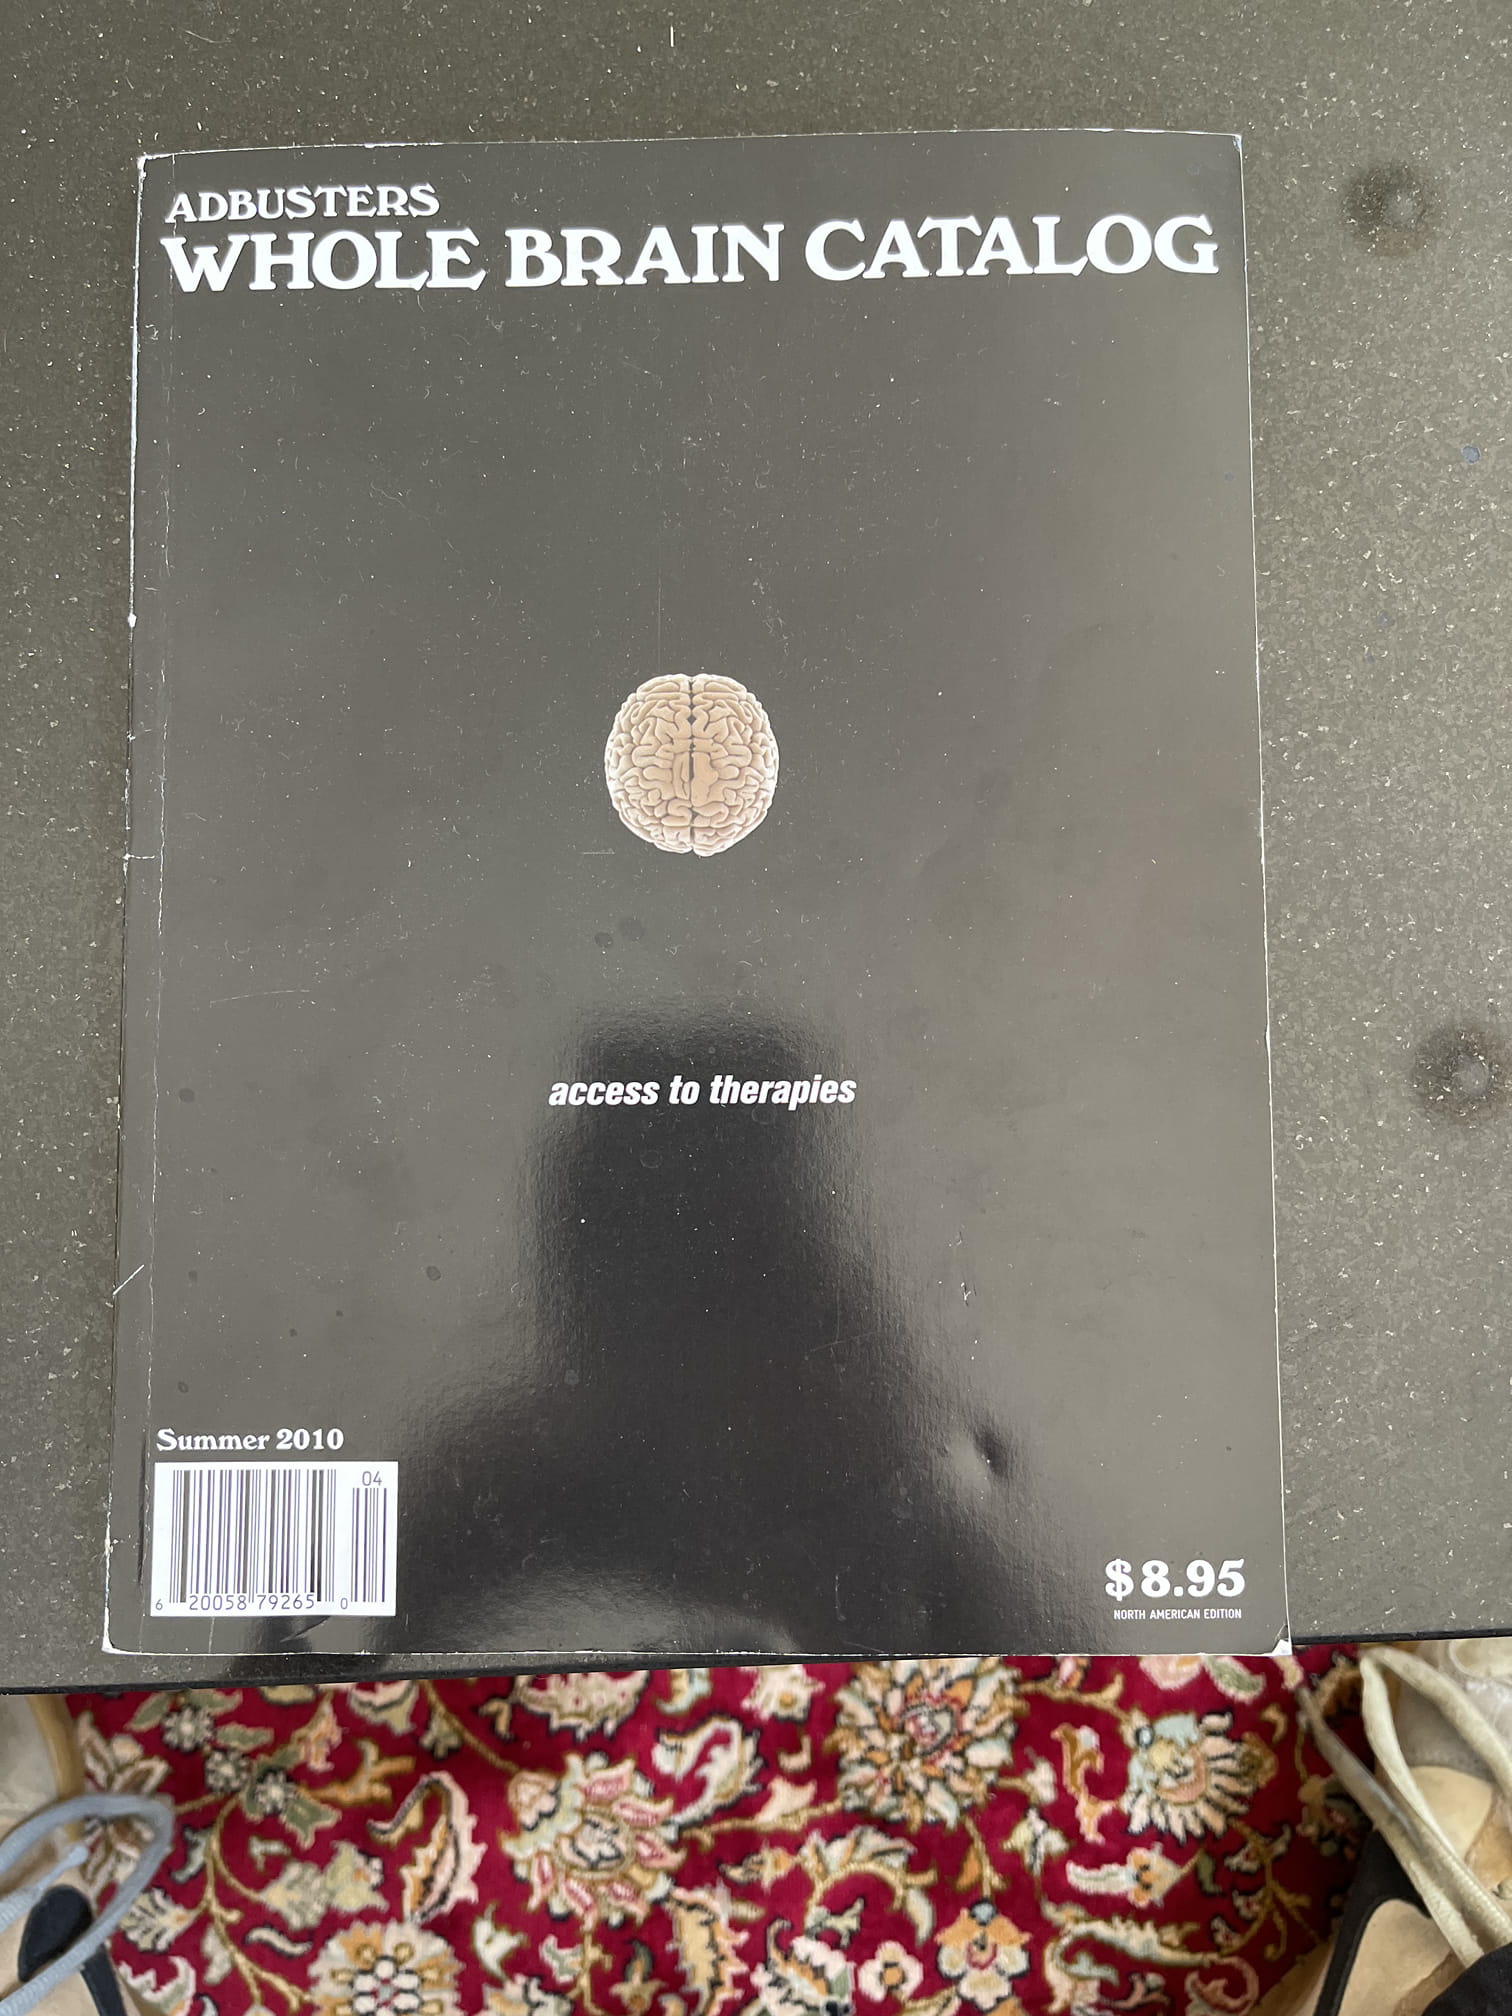 Whole brain catalog